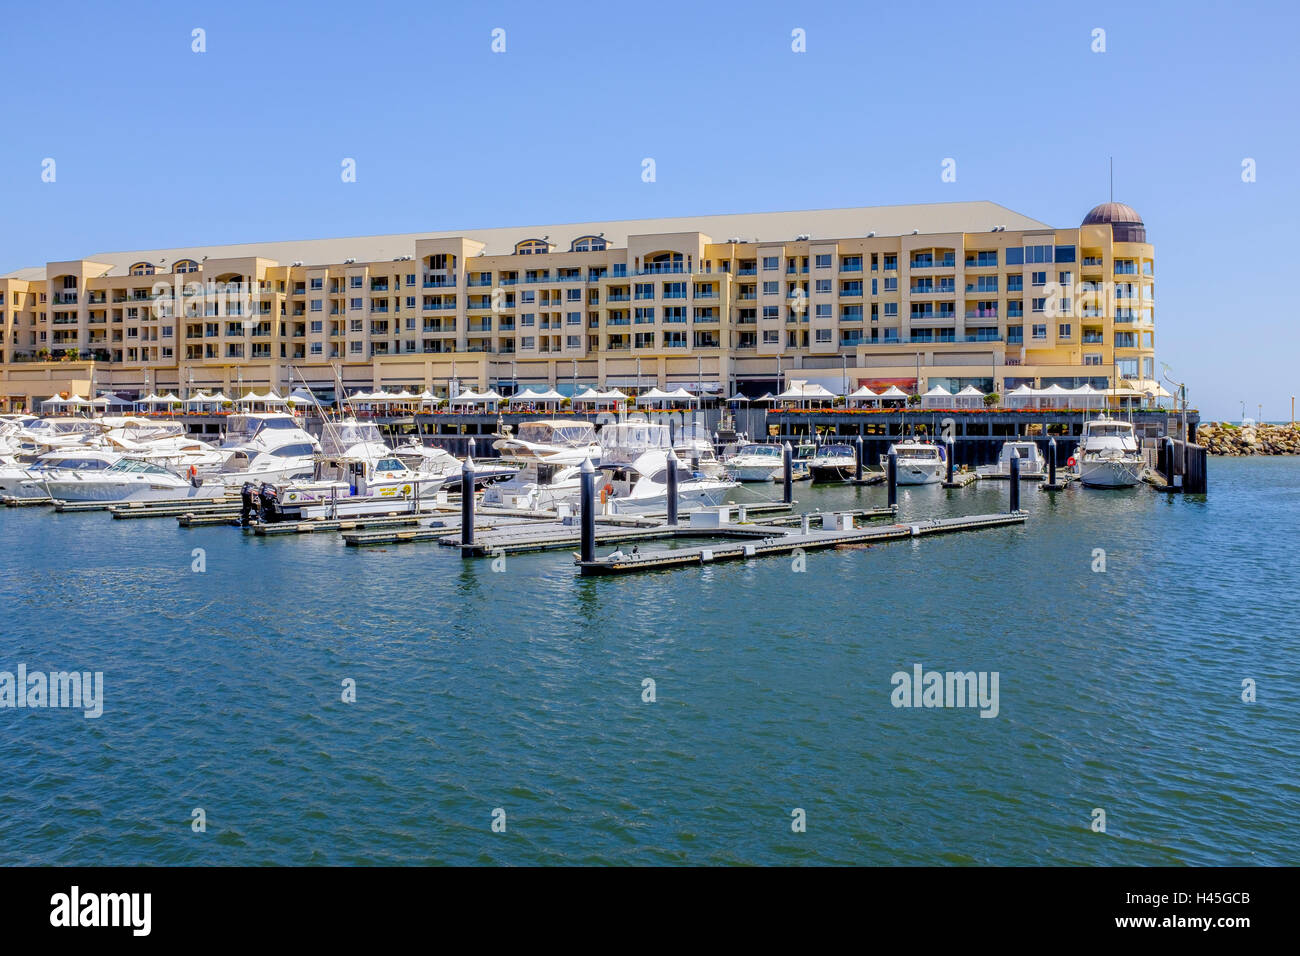 Die Marina am Glenelg, South Australia populärsten Strand-Entertainment-Bereich Stockfoto